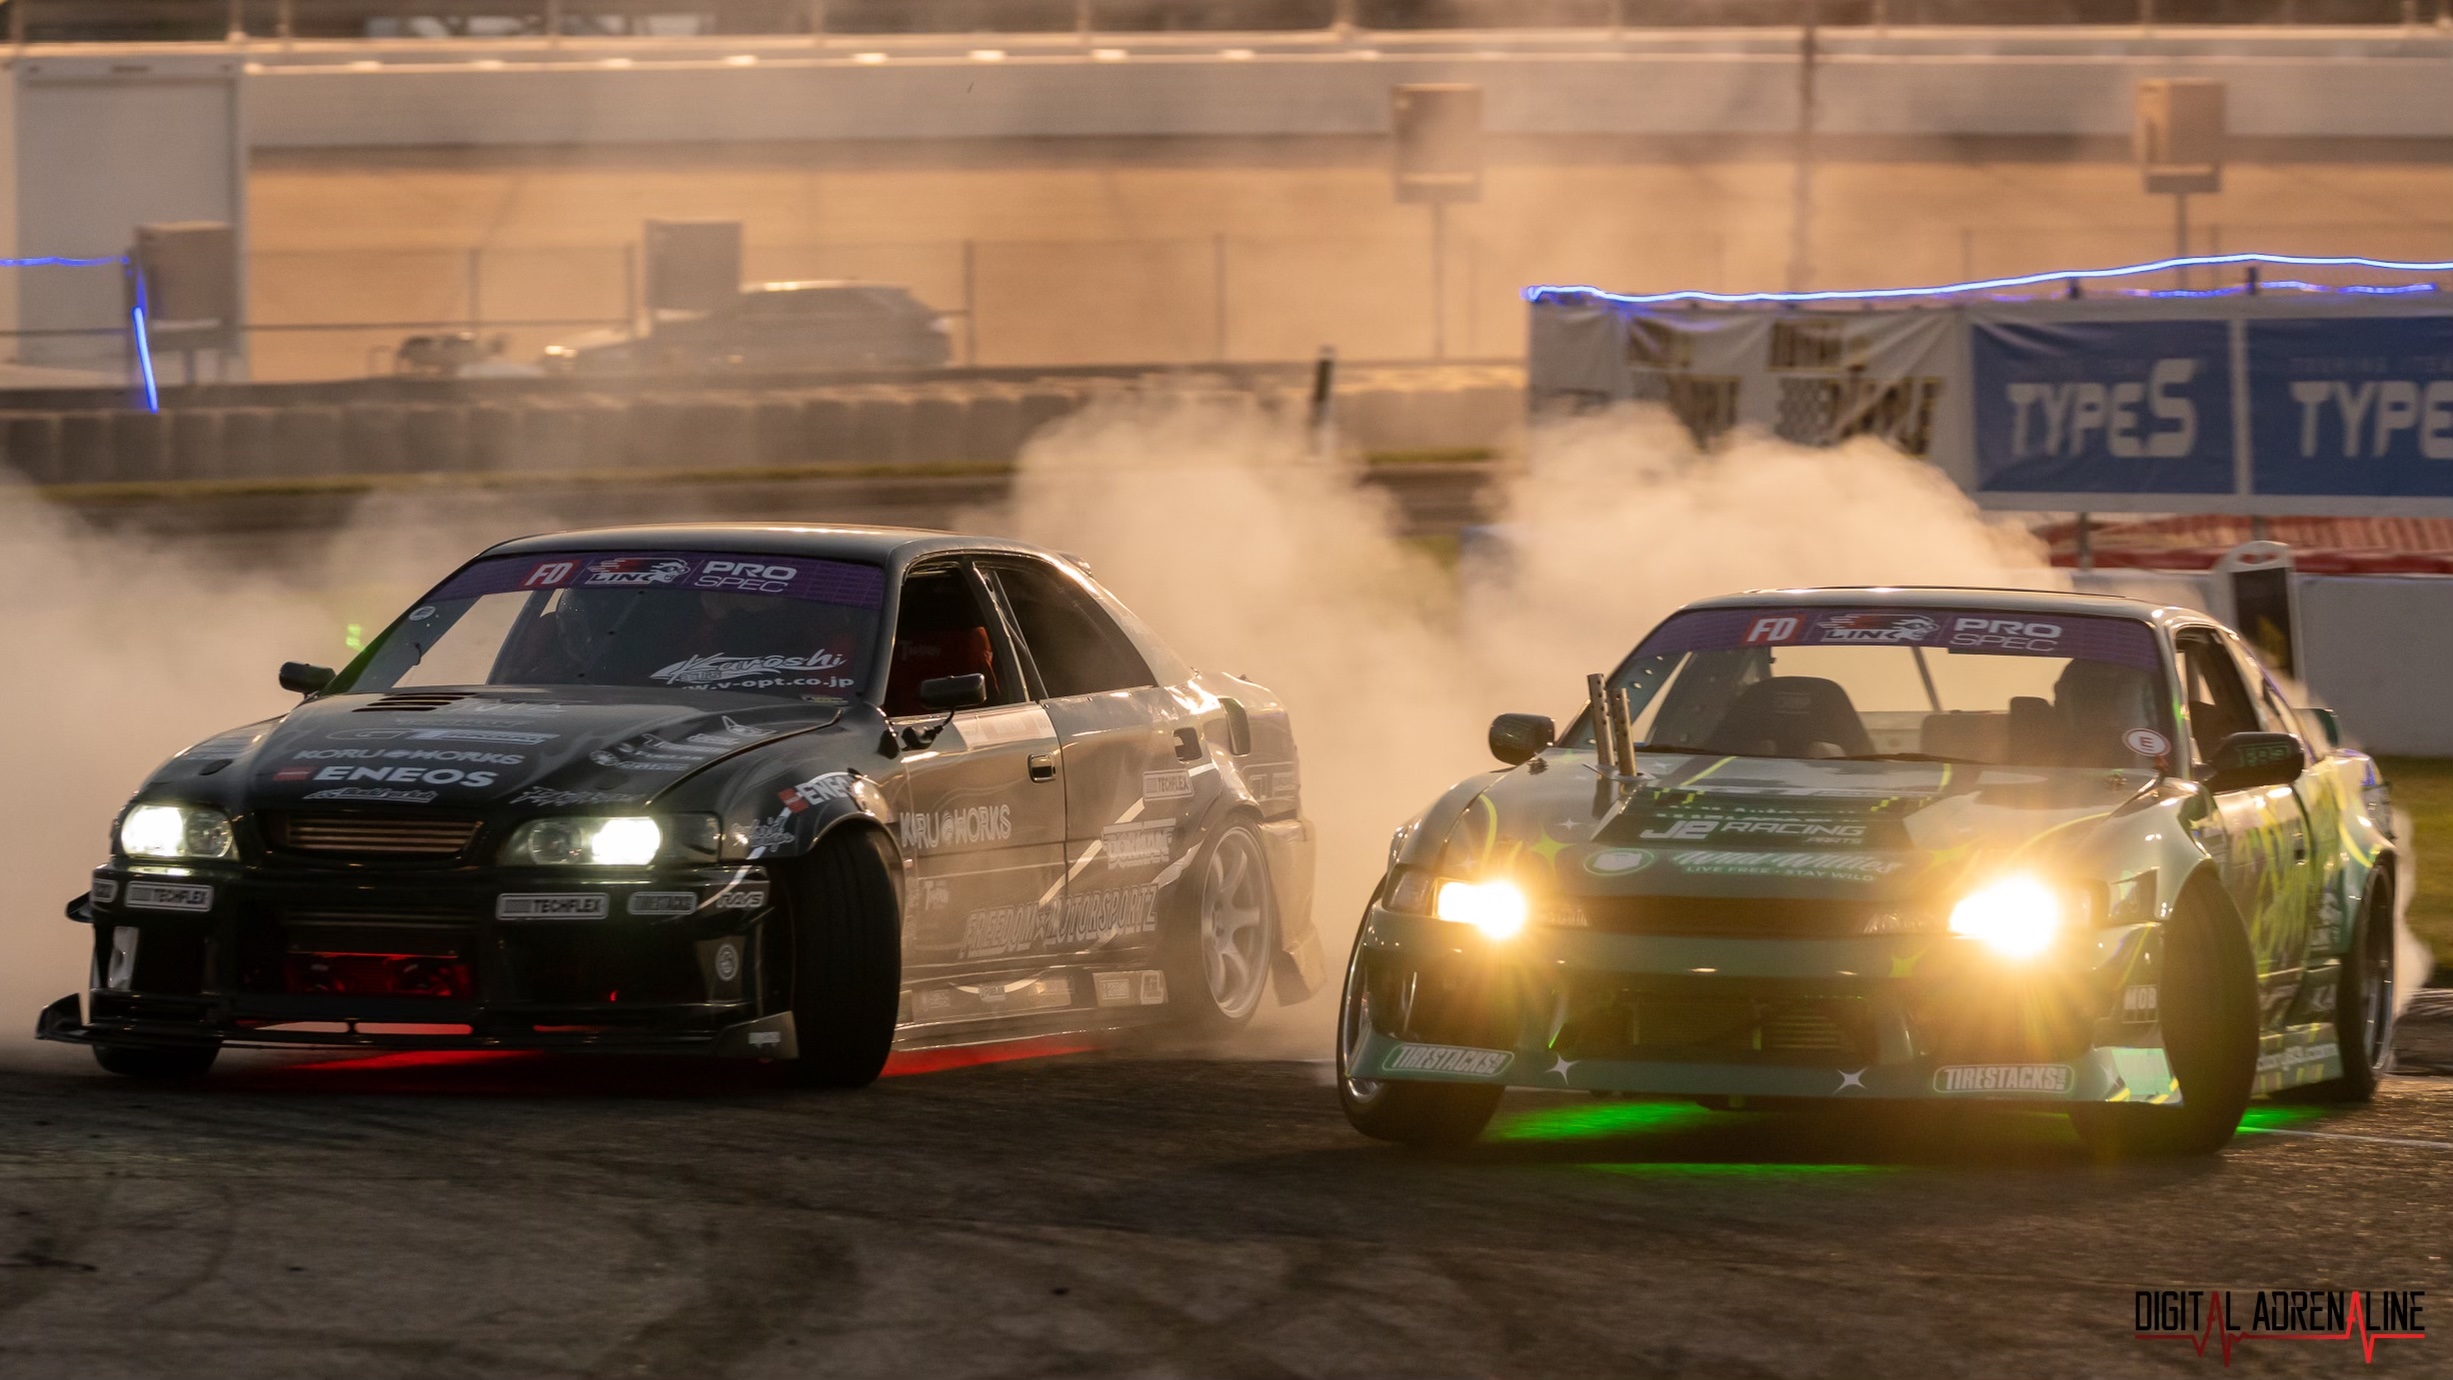 Two cars racing